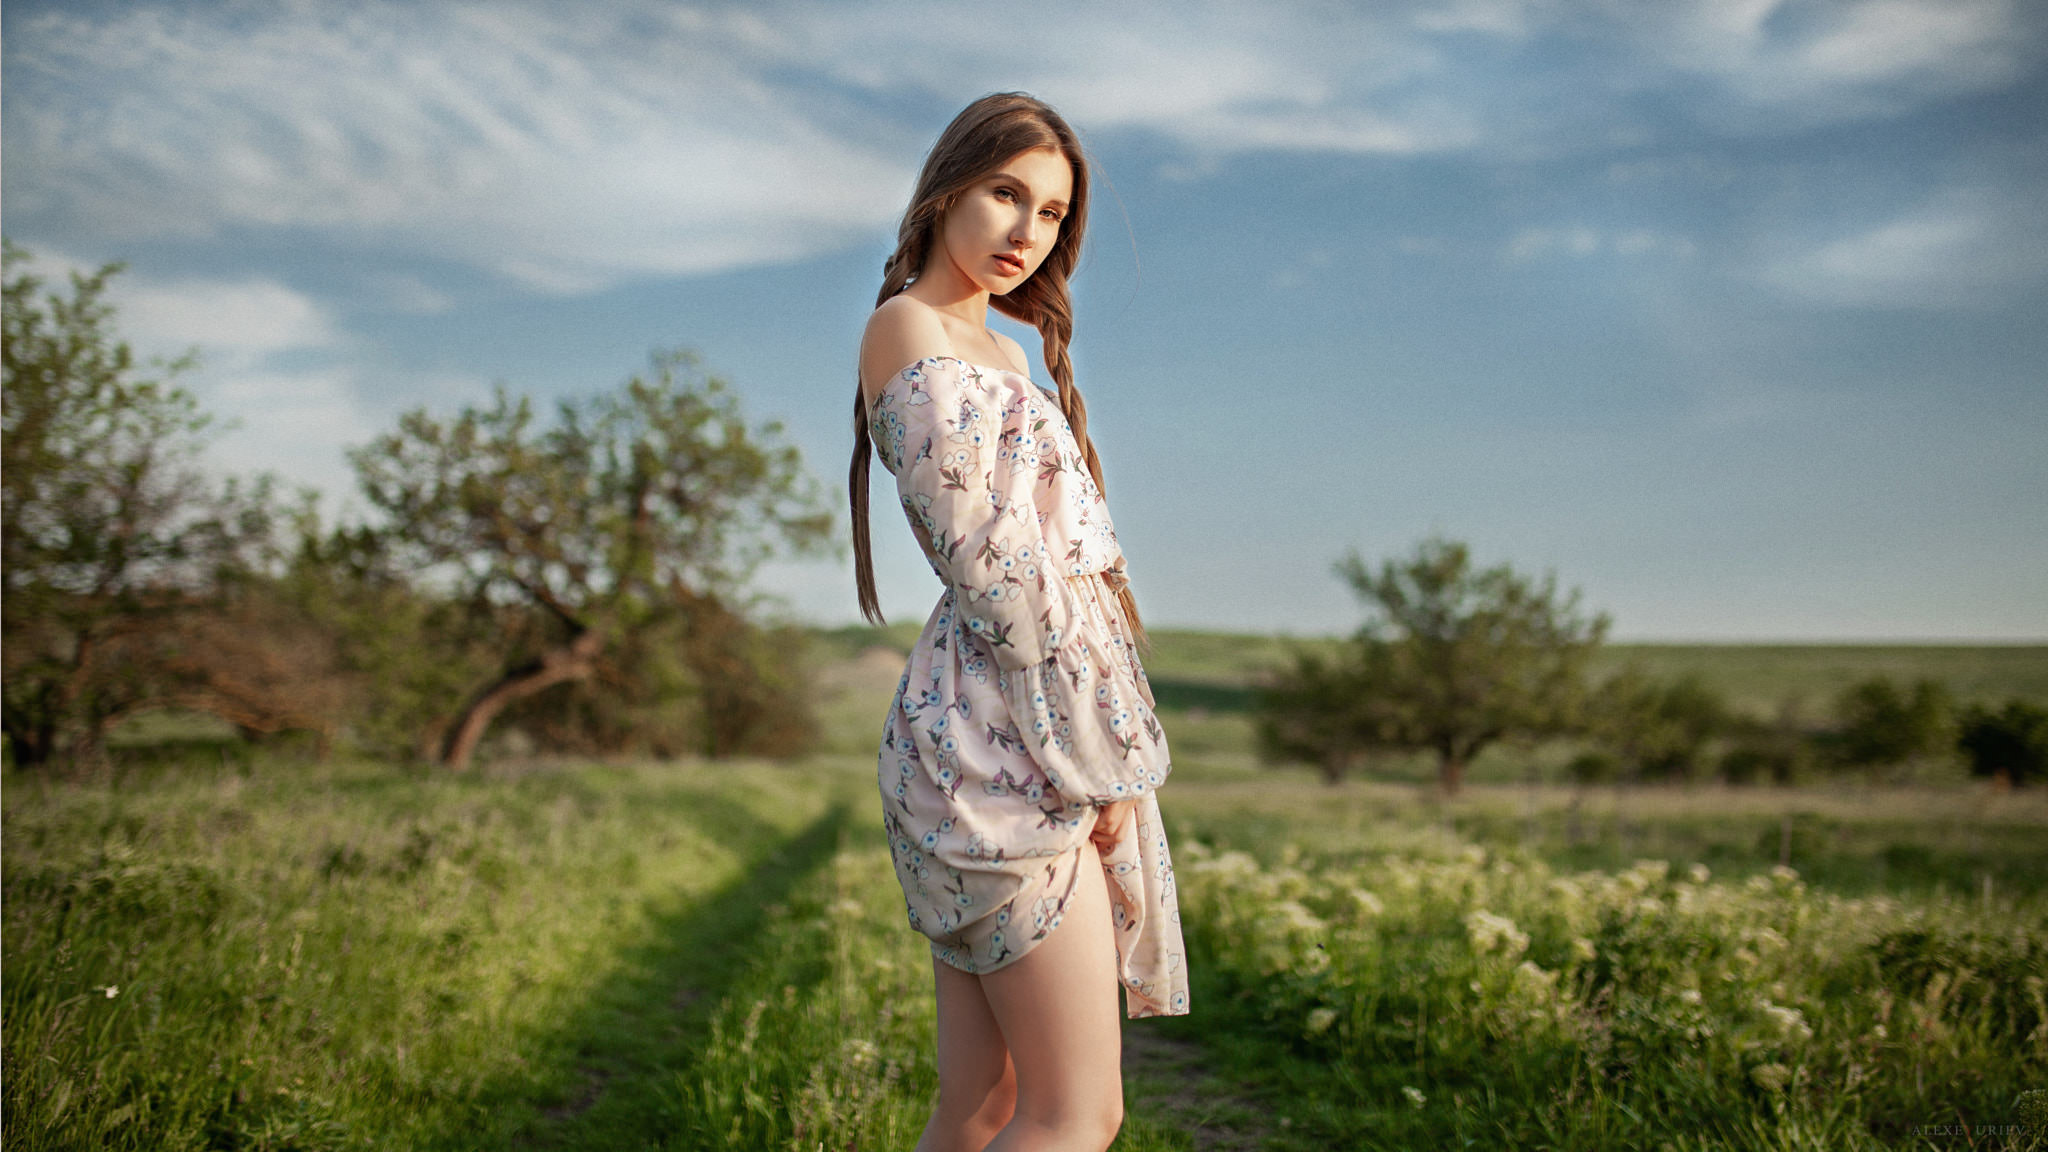 Women Diana Furmanova Dress Women Outdoors Long Hair Grass Pigtails Trees Alexey Yuryev 2048x1152